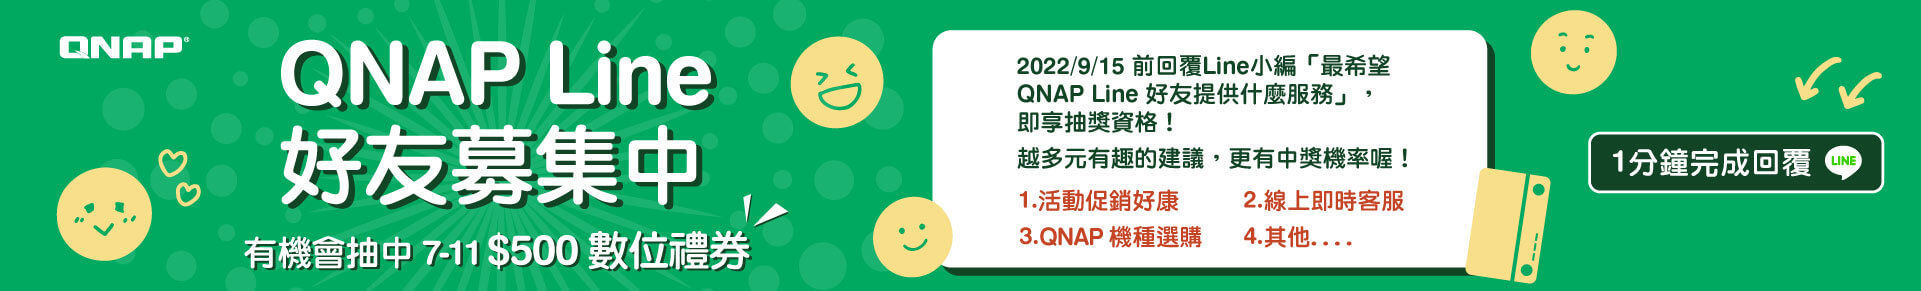 QNAP Line 好友募集中